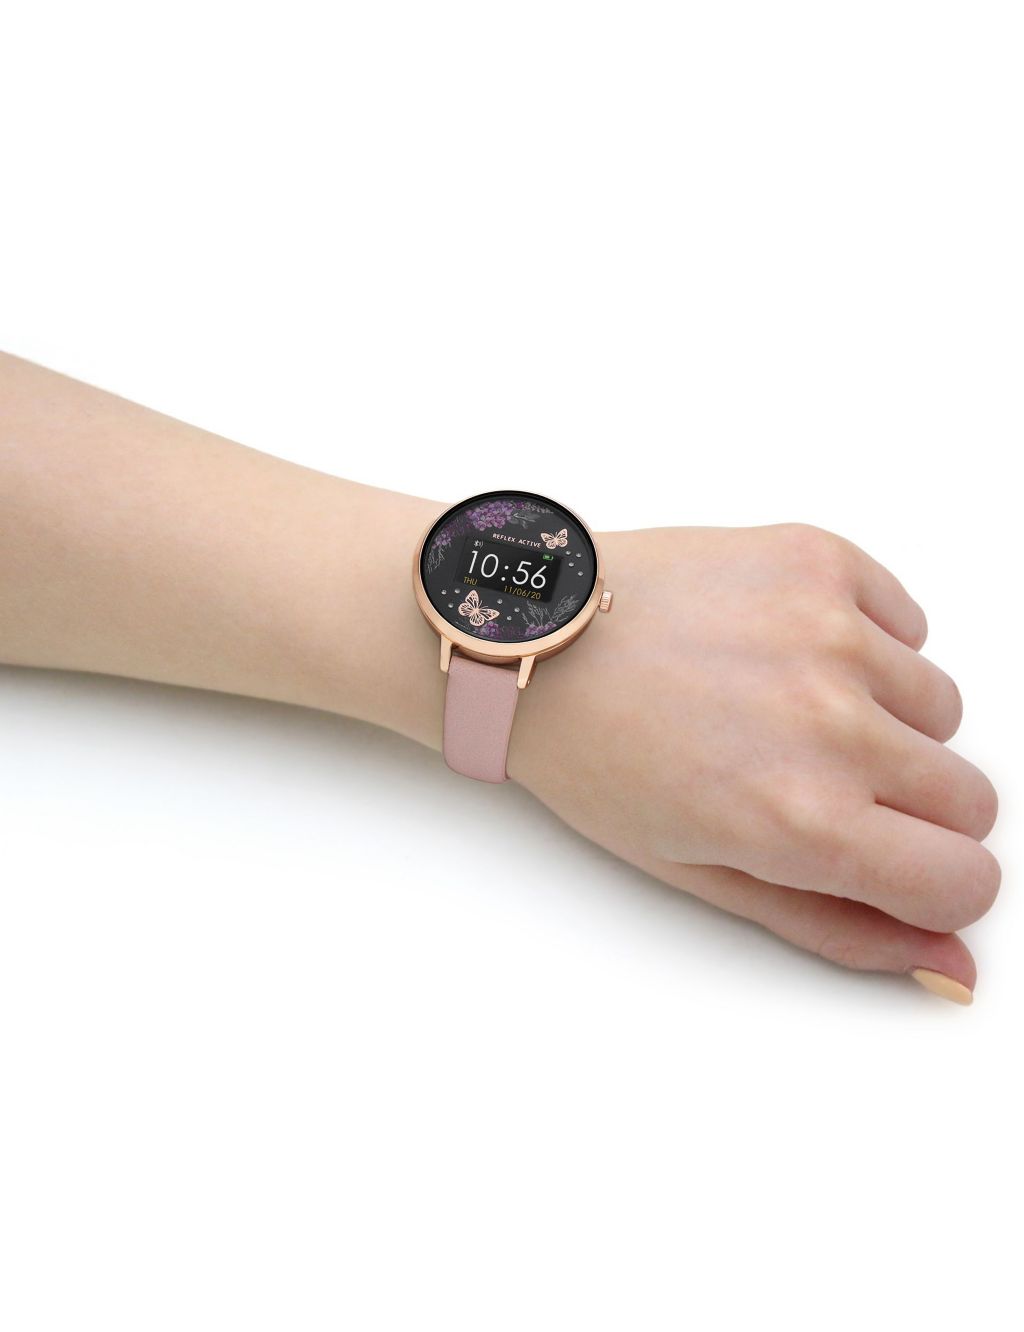 Reflex Active Series 3 Bluetooth Leather Smartwatch image 2